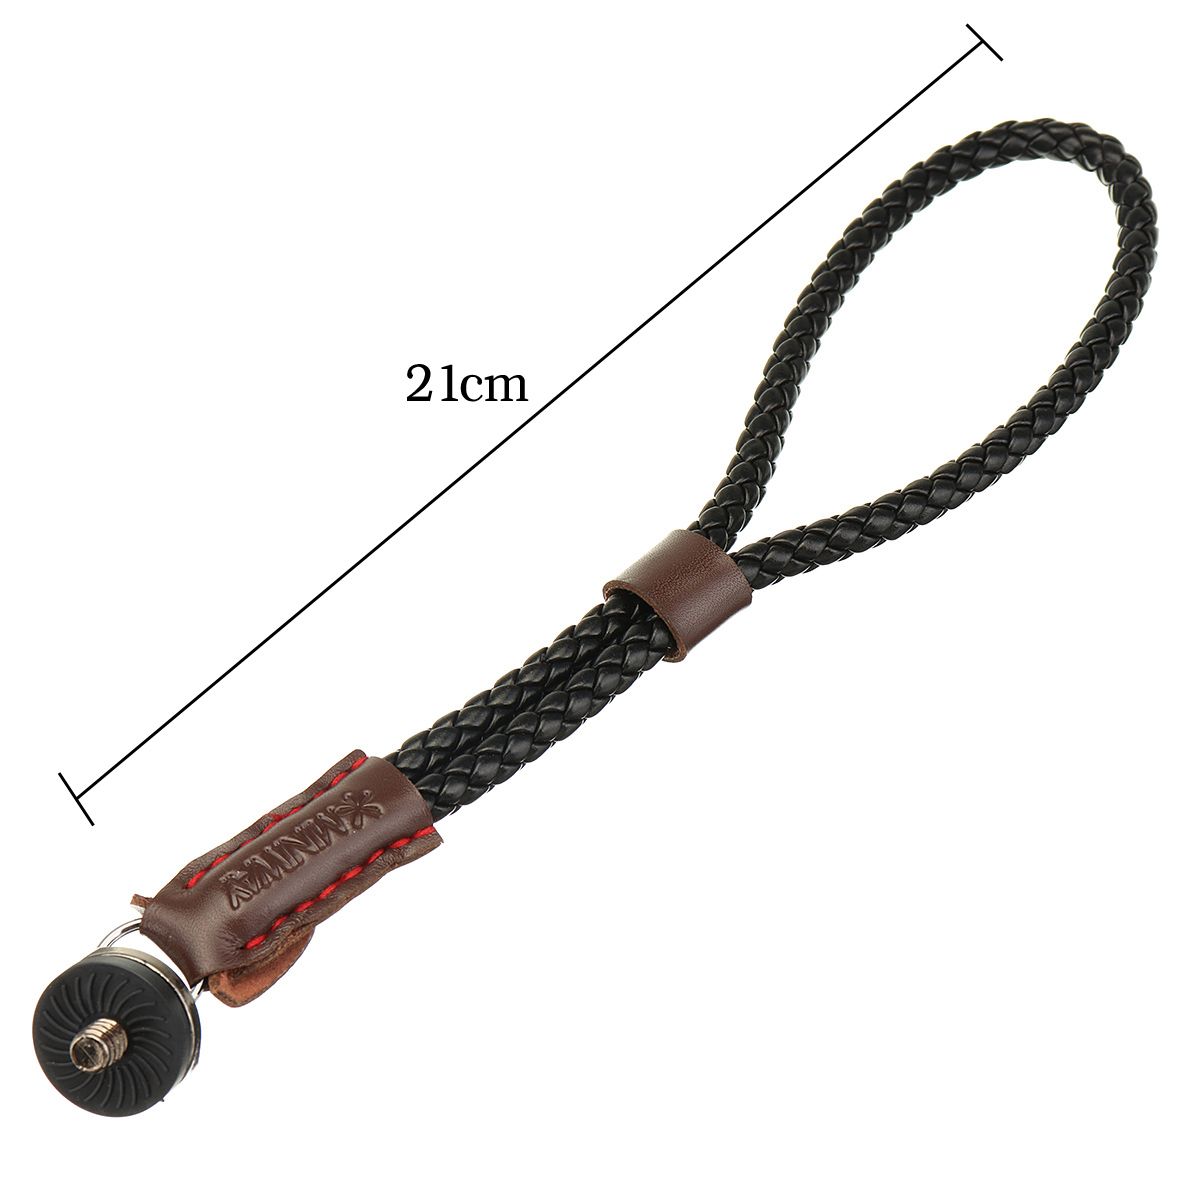 Lanyard-Wrist-Band-Strap-Hand-Rope-for-OSMO-Mobile-2-Handheld-Gimbal-Camera-Protective-1292620